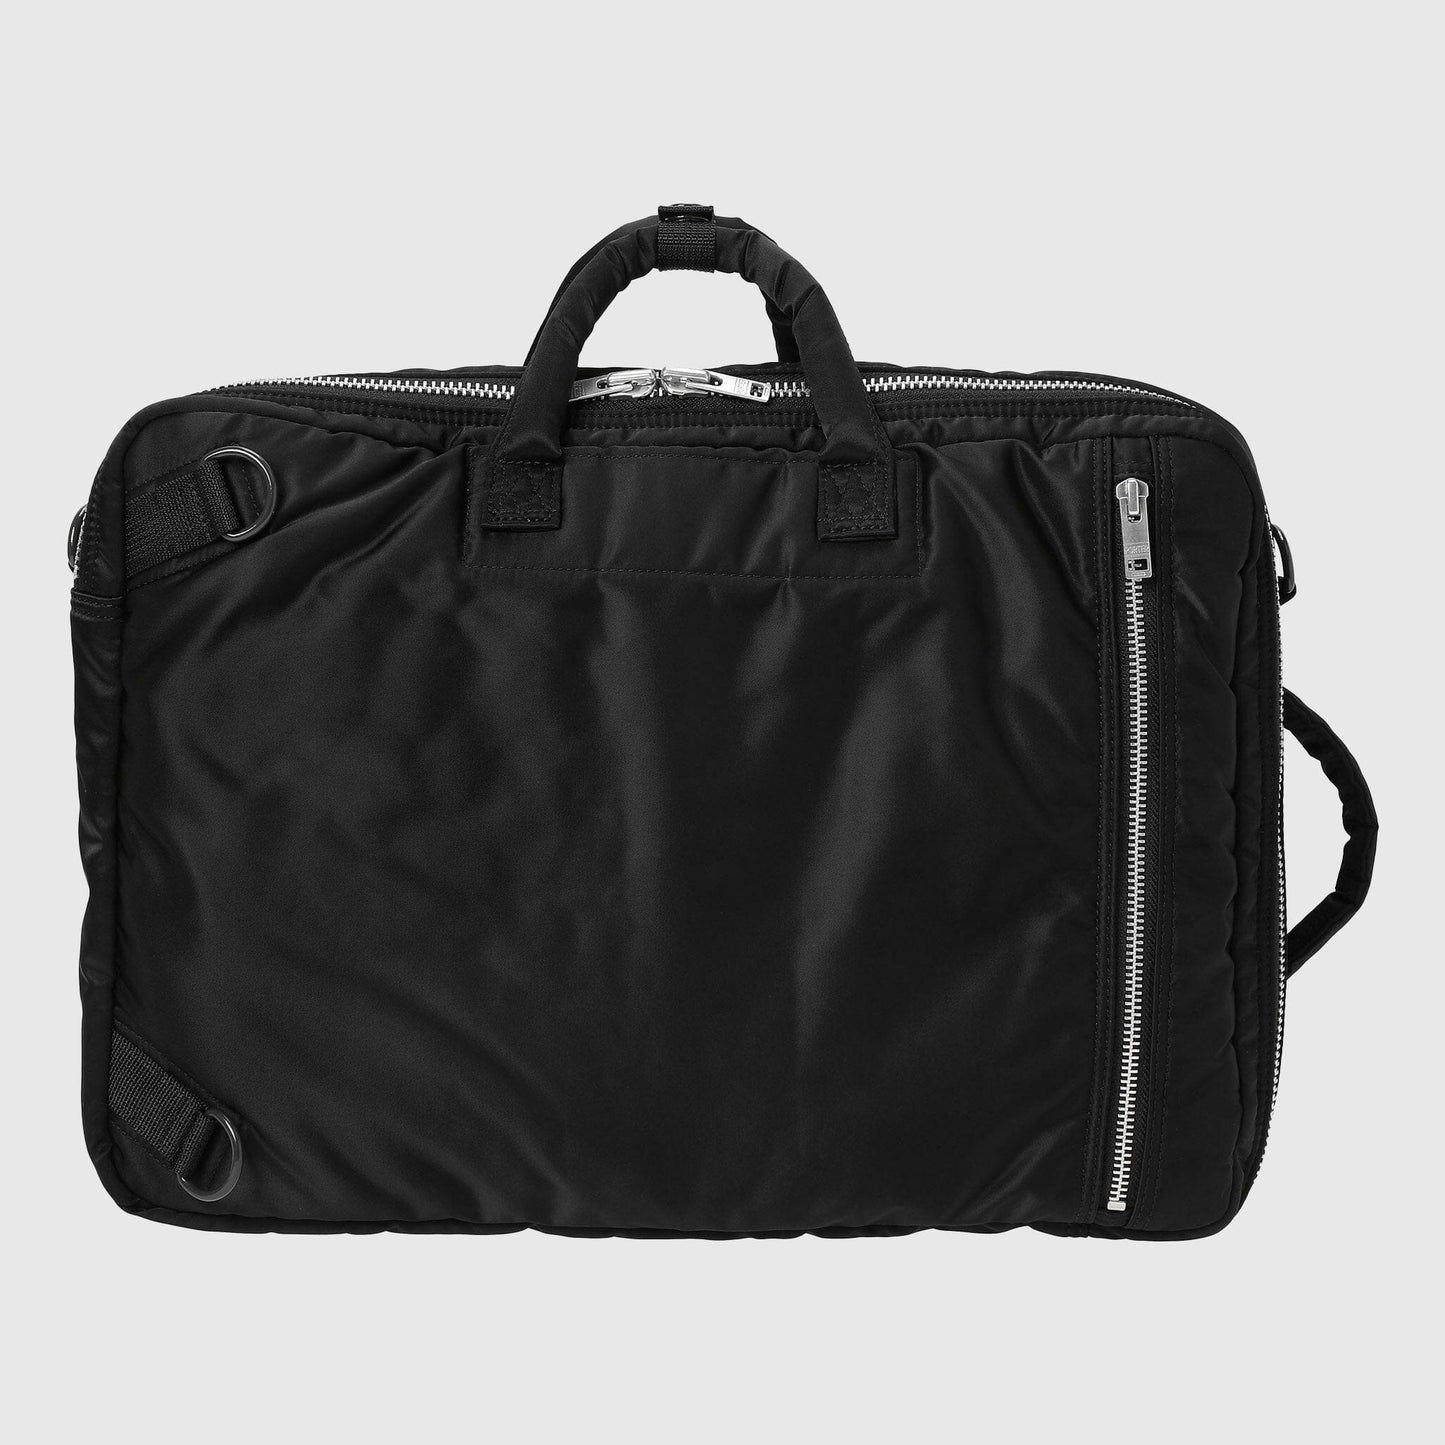 Porter-Yoshida & Co. Tanker 2Way Overnight Briefcase - Black Bag Porter-Yoshida & Co. 